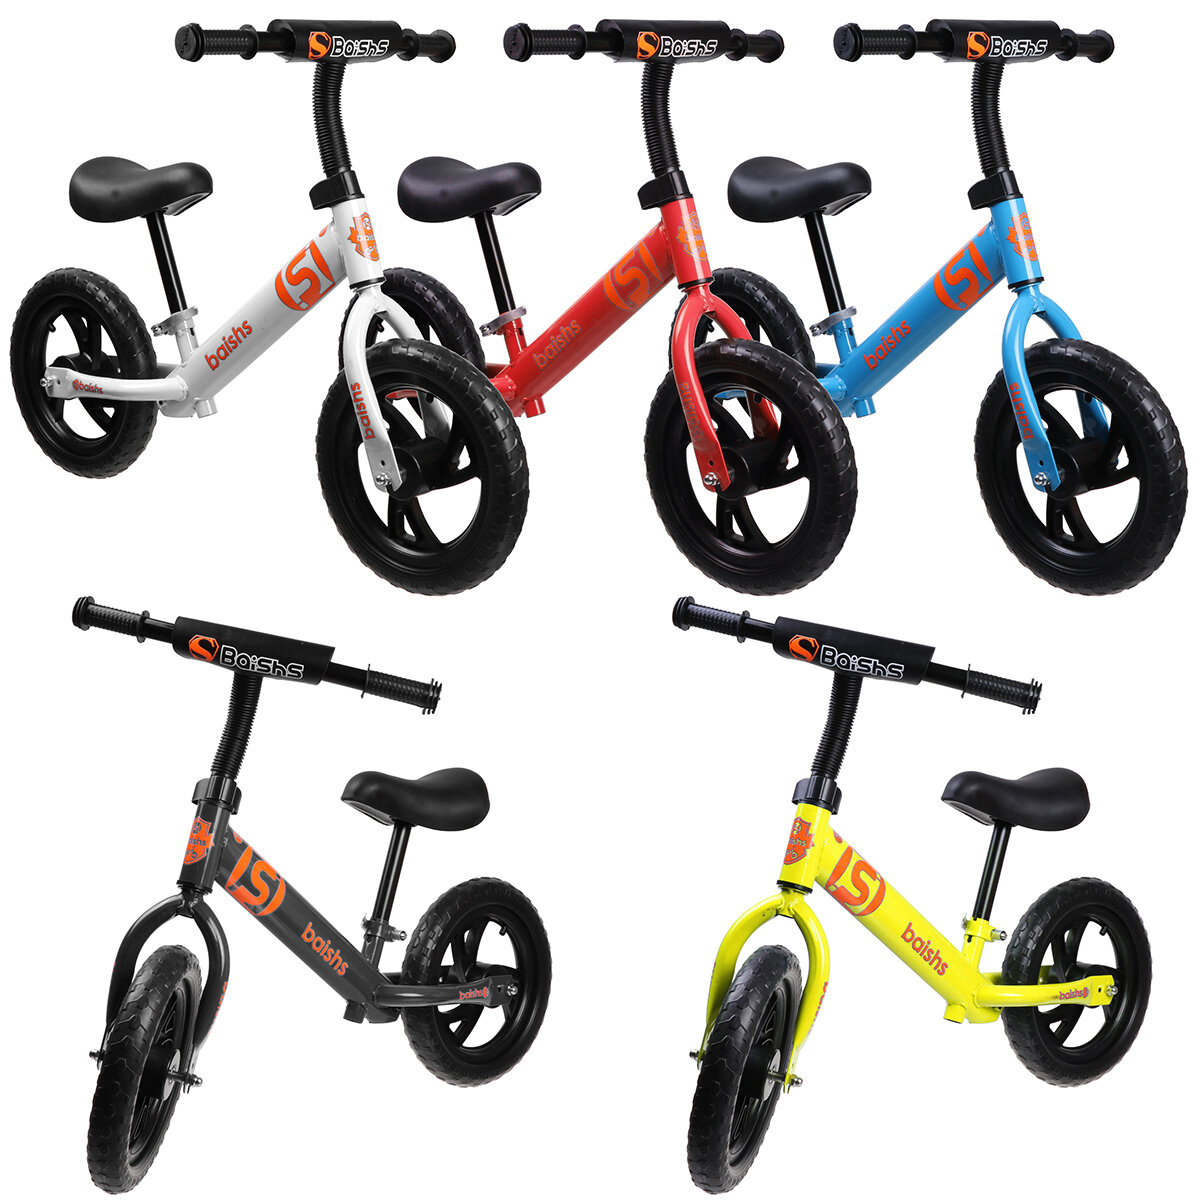 Toddler Adjustable Safety Balance Bike Best Walker Kids Baby Children Ride Learning for 2-6 Years Old